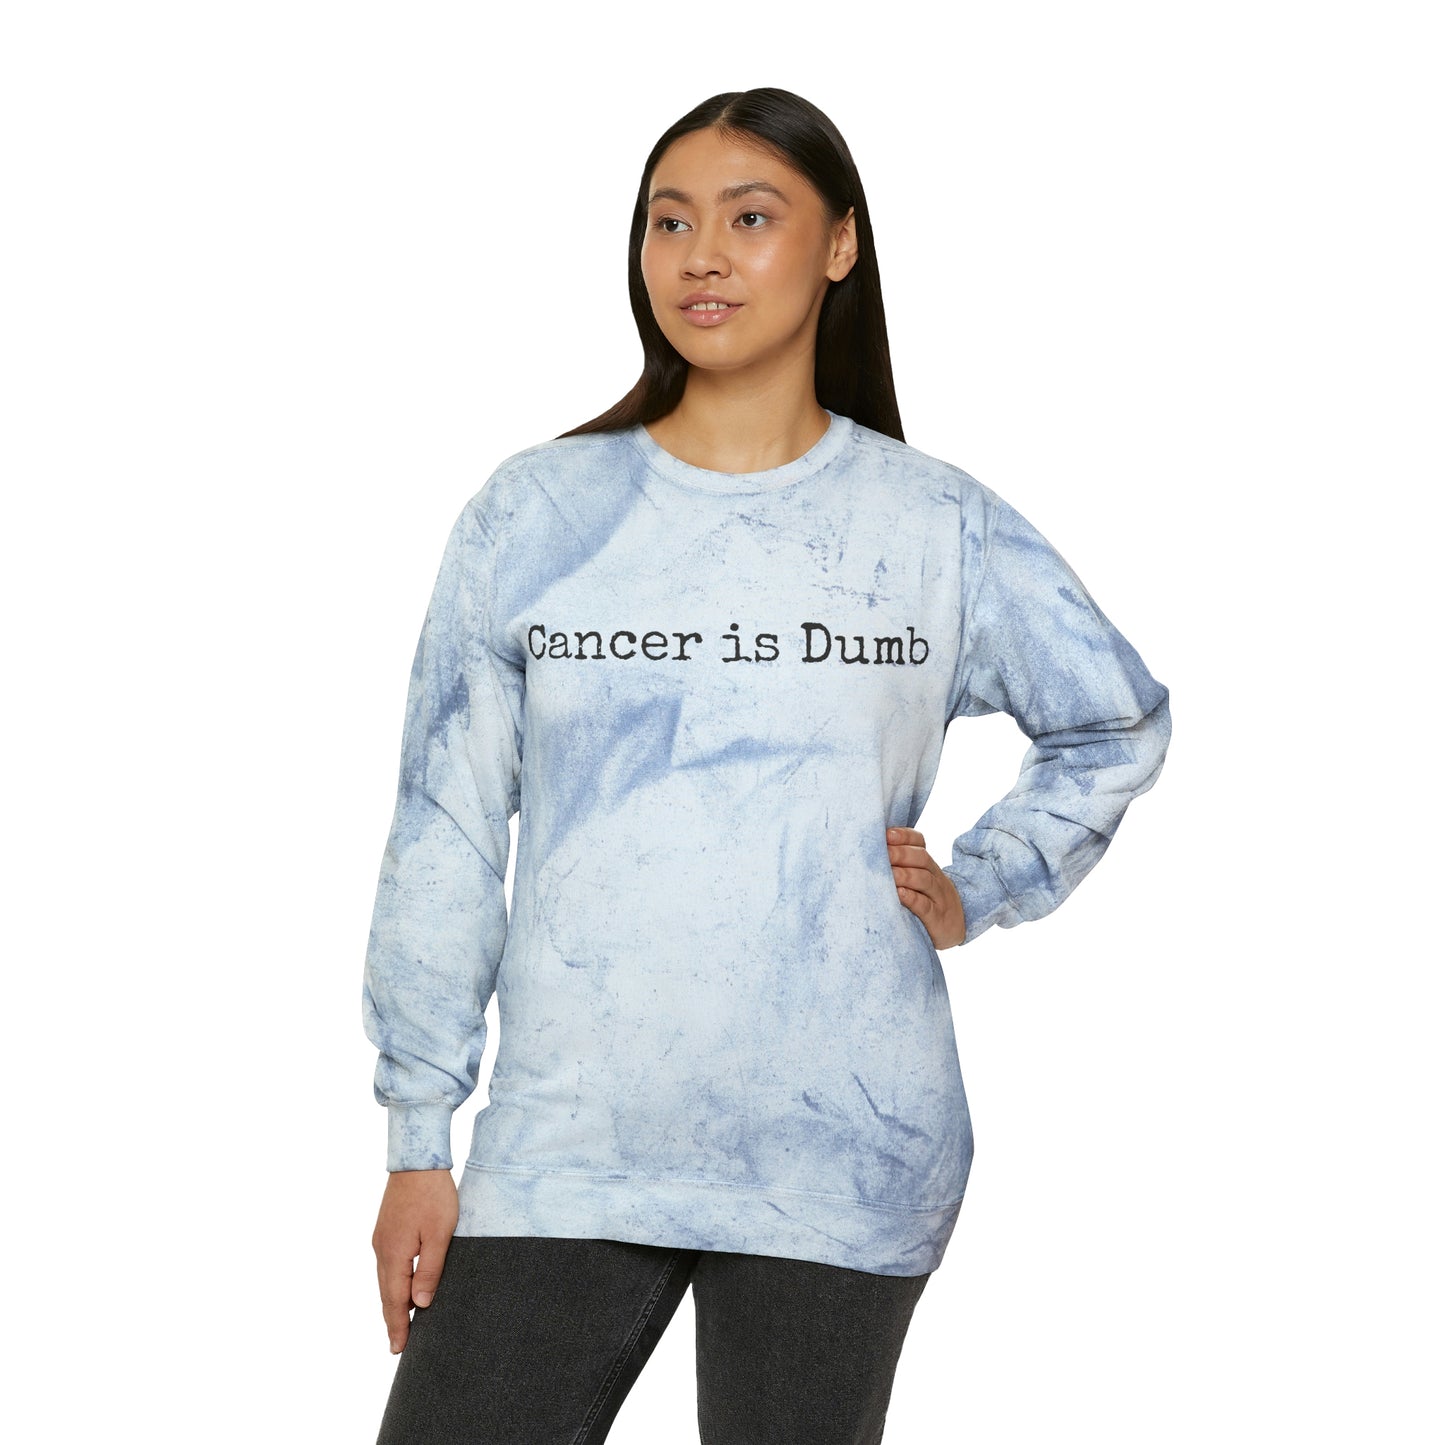 Unisex Color Blast Crewneck Sweatshirt Mens Womens Apparel Clothing Anti Cancer Cancer is Dumb Survivor Support Humorous Funny